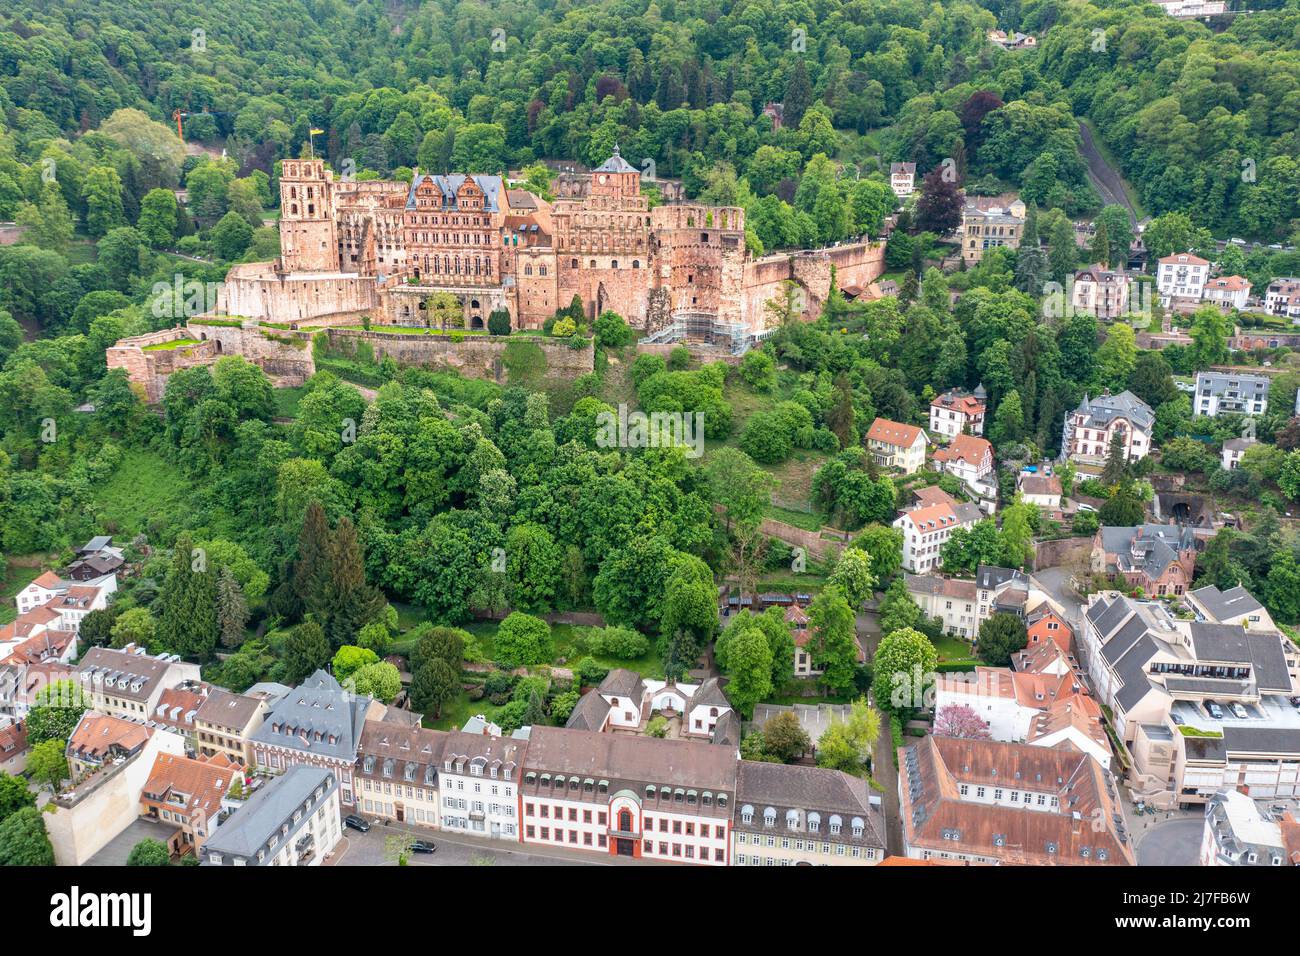 Schloss Heidelberg oder Schloss Heidelberg, Heidelberg, Deutschland Stockfoto